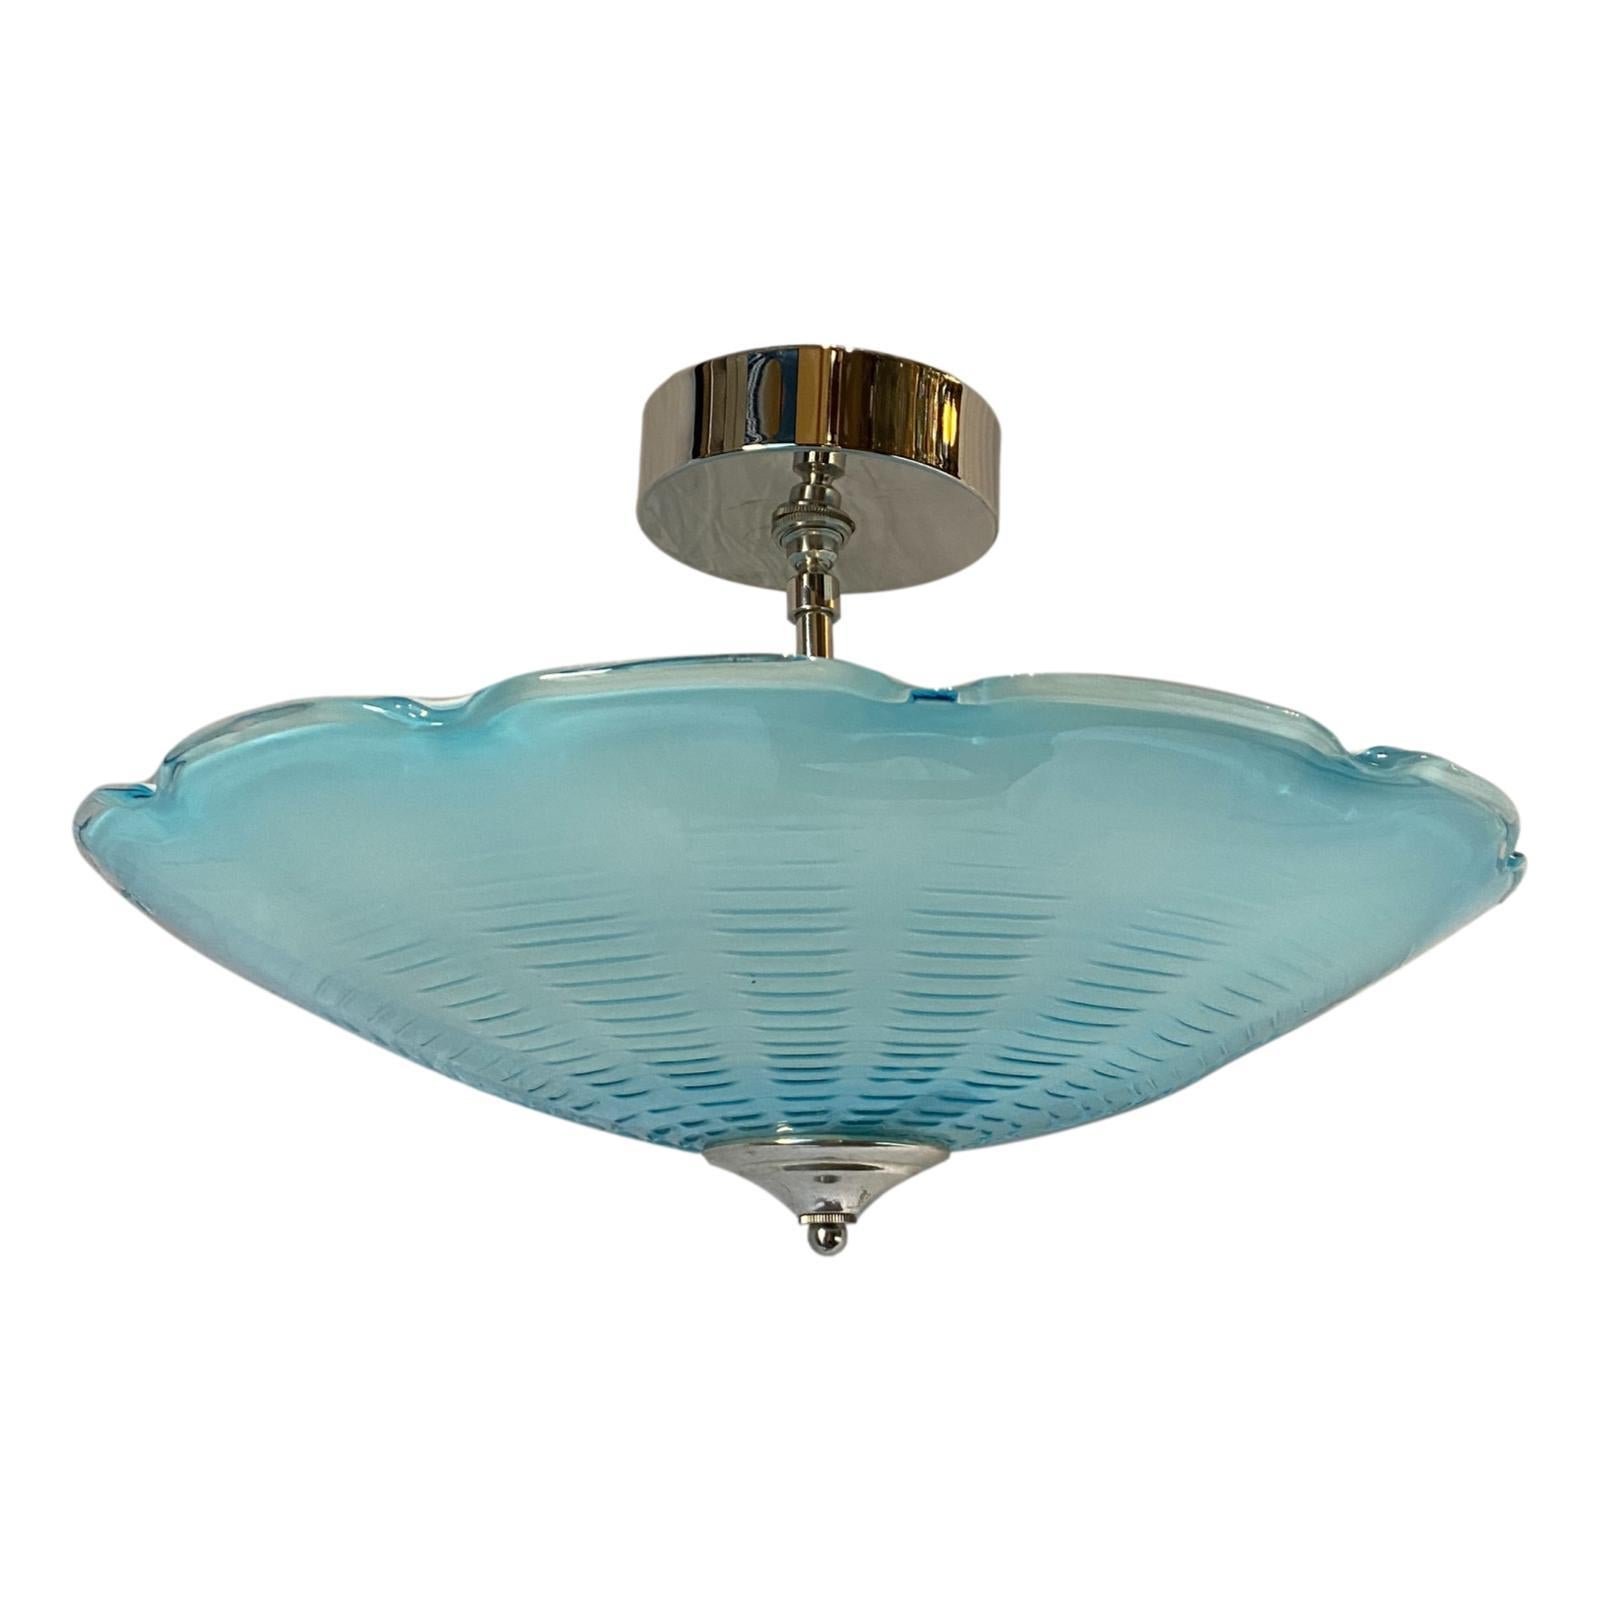 A circa 1930s semi-flushed pendant blue blown glass light fixture with three interior candelabra lights.

Measurements:
Height 10?
Diameter 19?.